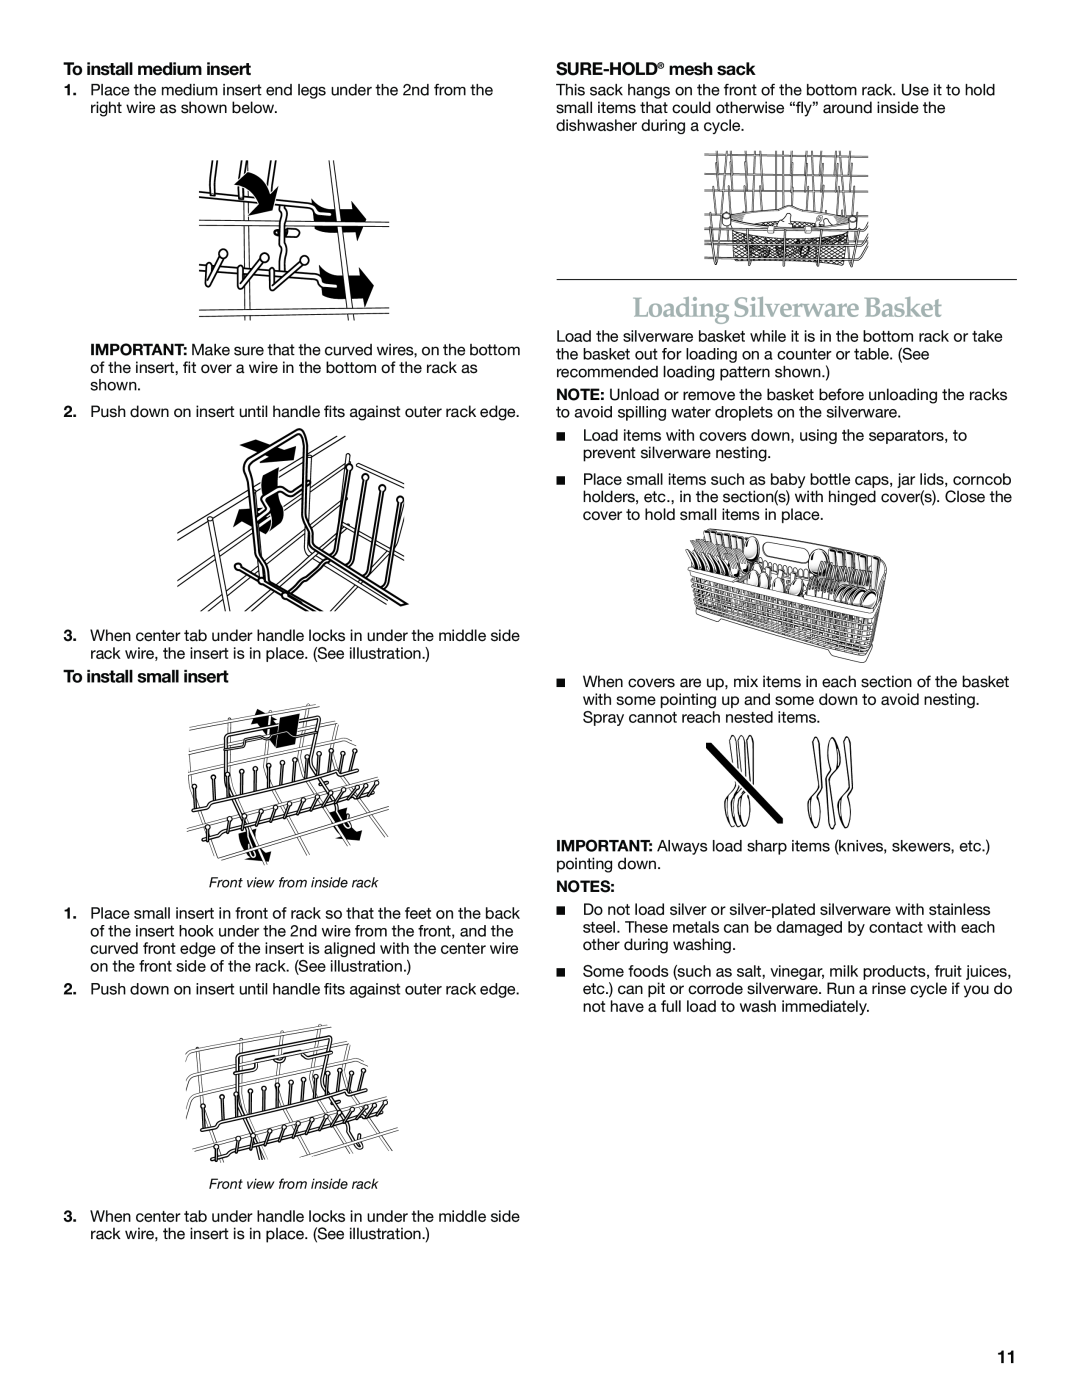 KitchenAid KUDS01VM Loading Silverware Basket, To install medium insert, To install small insert, SURE-HOLD mesh sack 